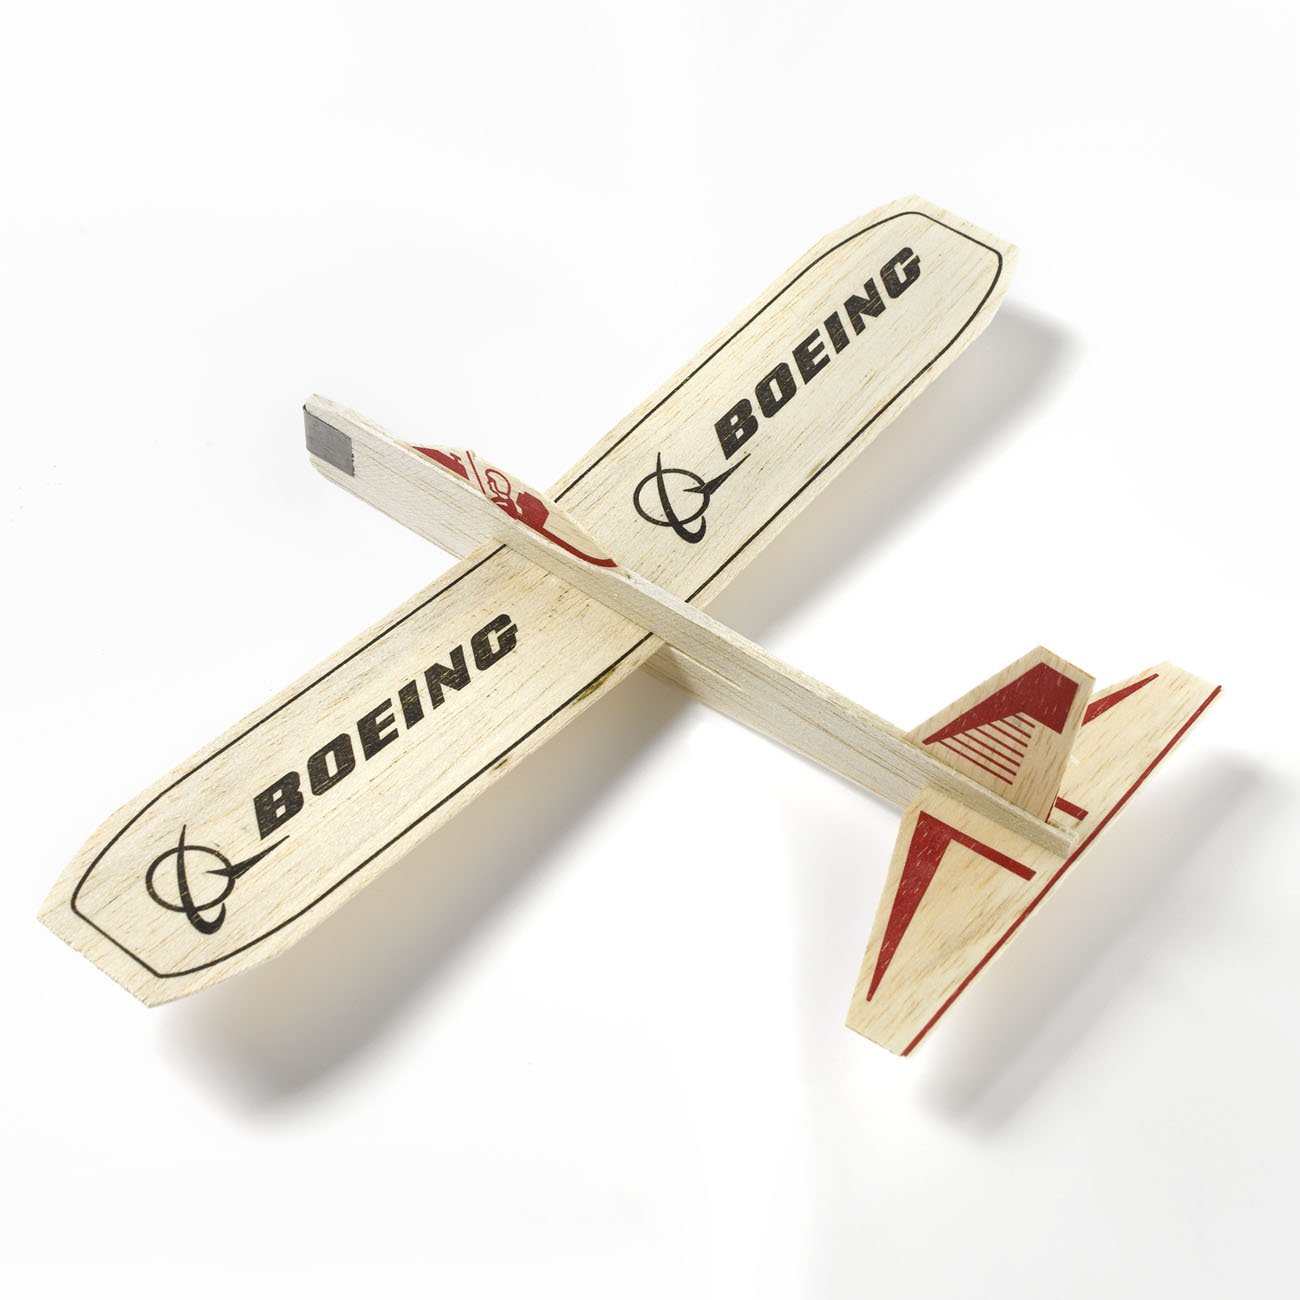 Boeing Balsa Wood Glider - Large